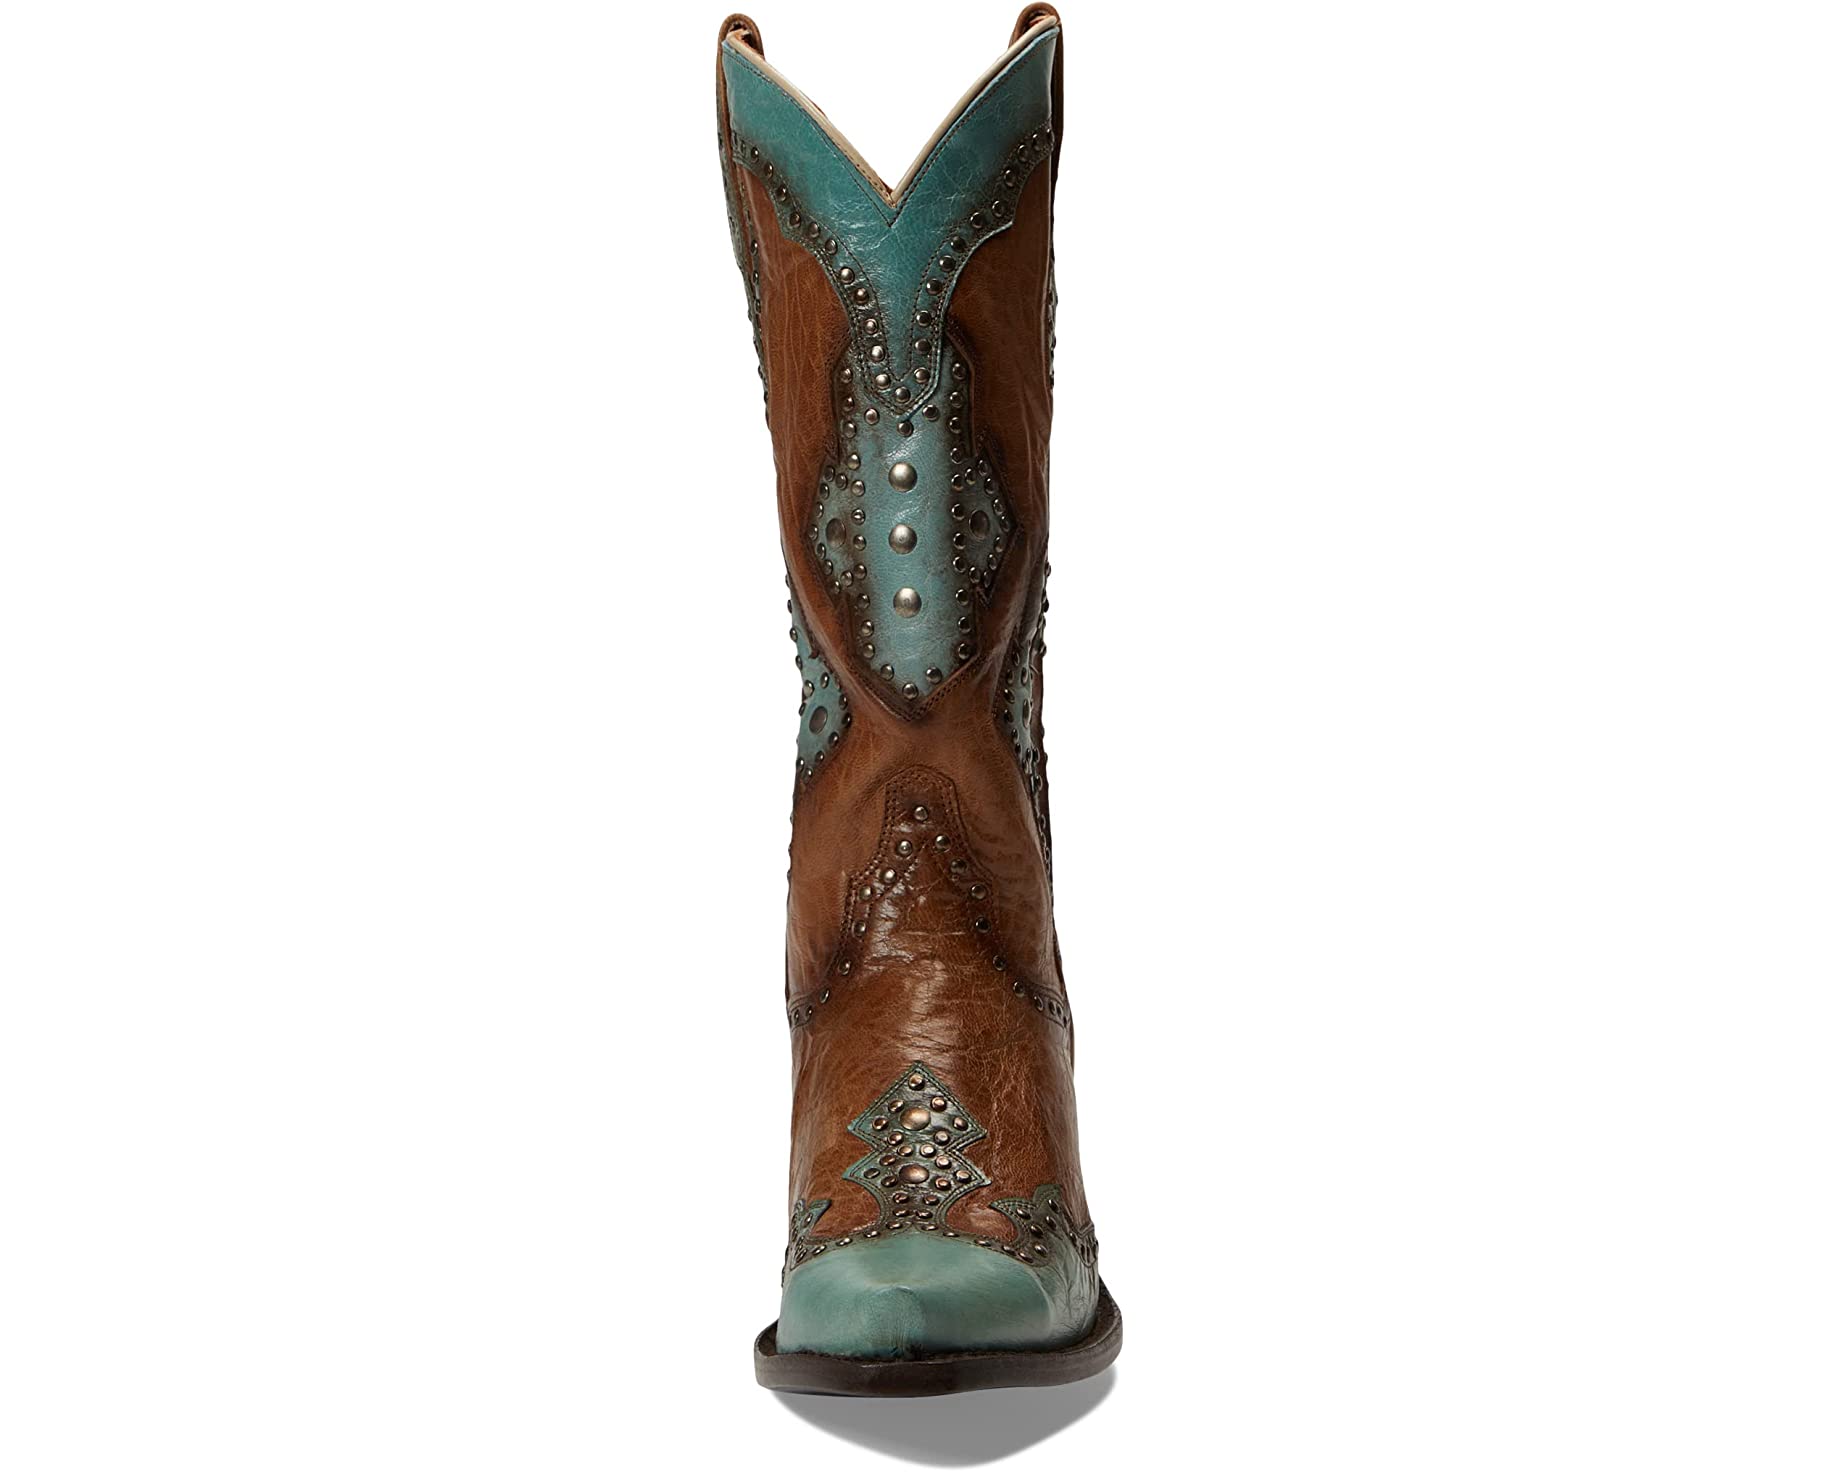 Ботинки Taryn Dan Post, коричневый ботинки dan post warrior composite toe цвет brown leather